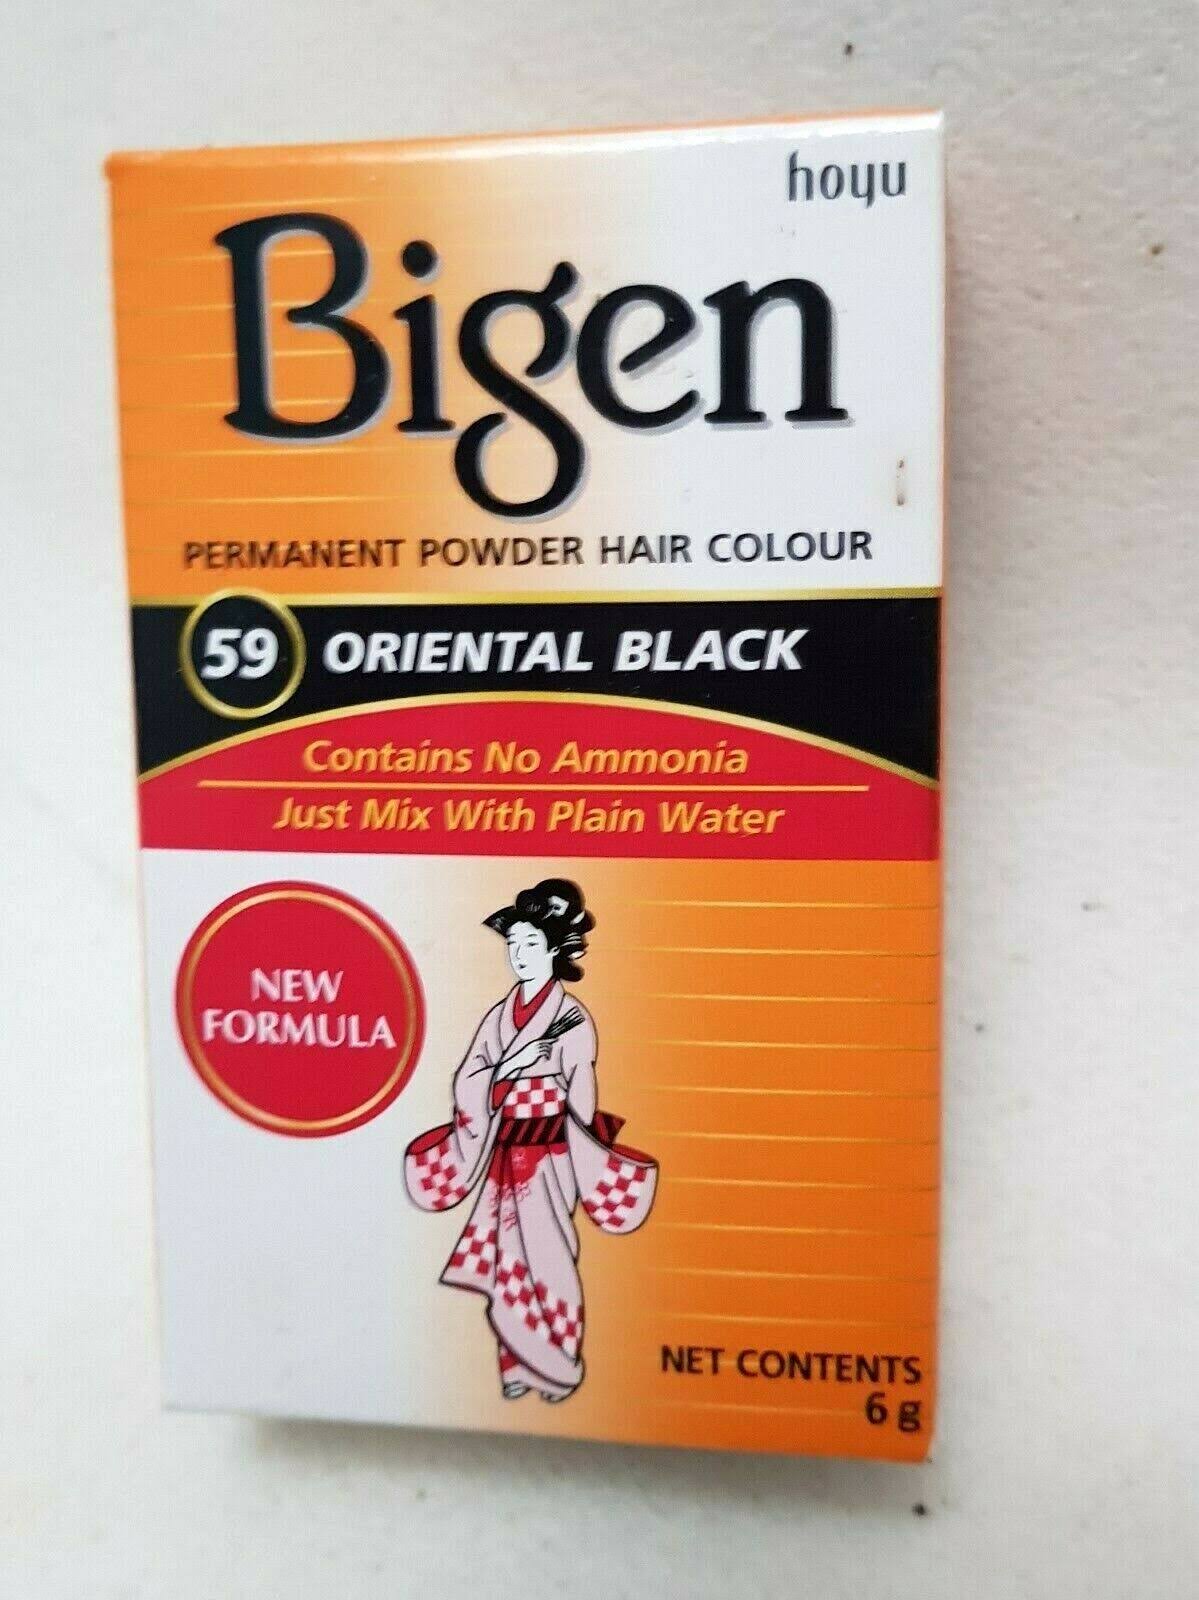 Bigen Permanent Powder Hair Colour - 59 Oriental Black, 6g